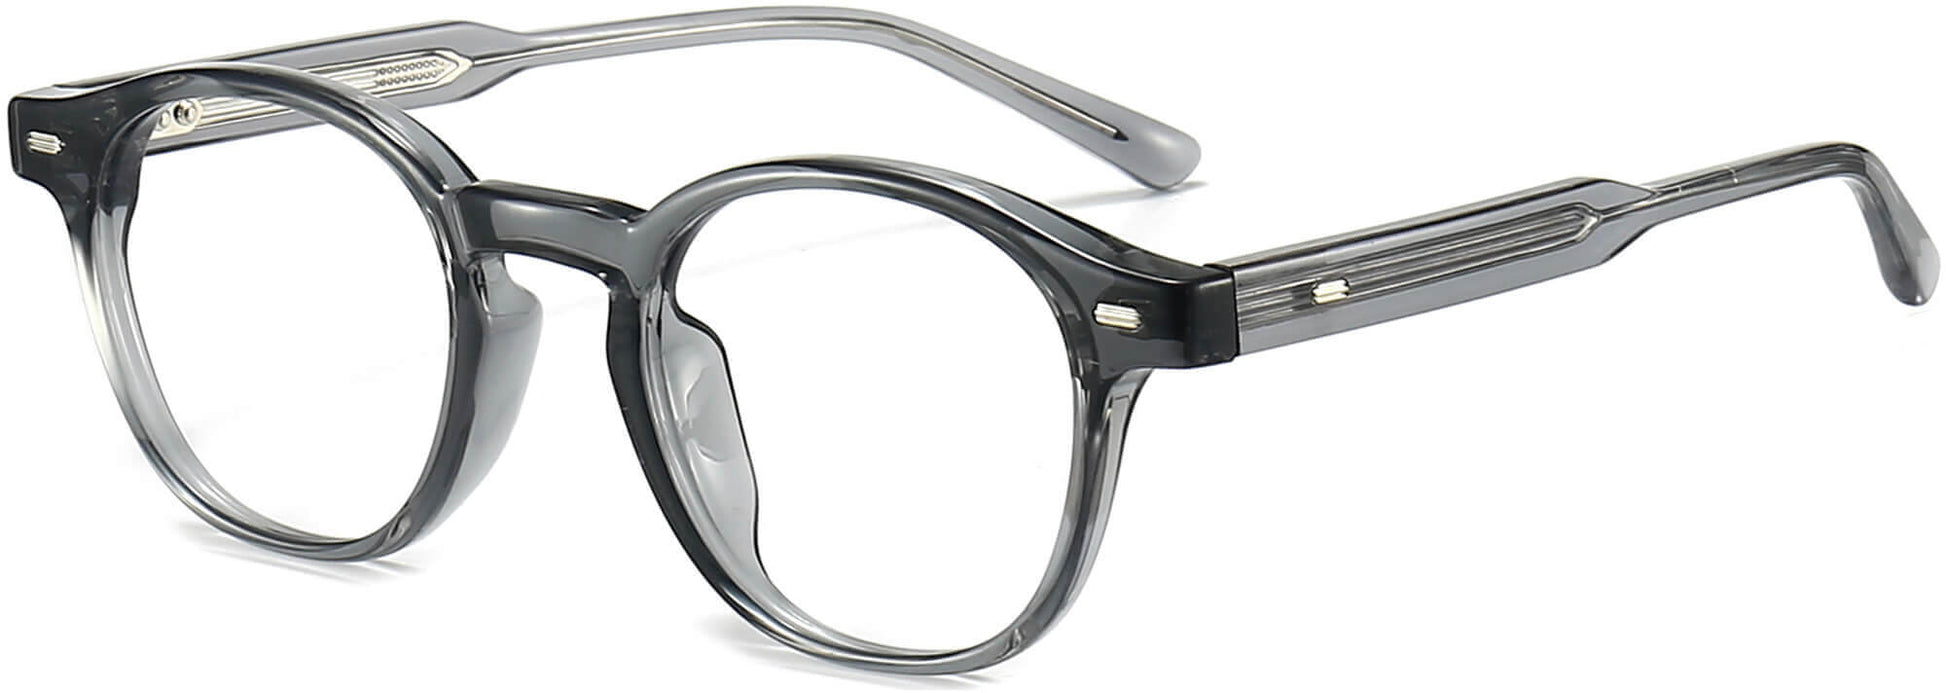 Jonas Round Gray Eyeglasses from ANRRI, angle view